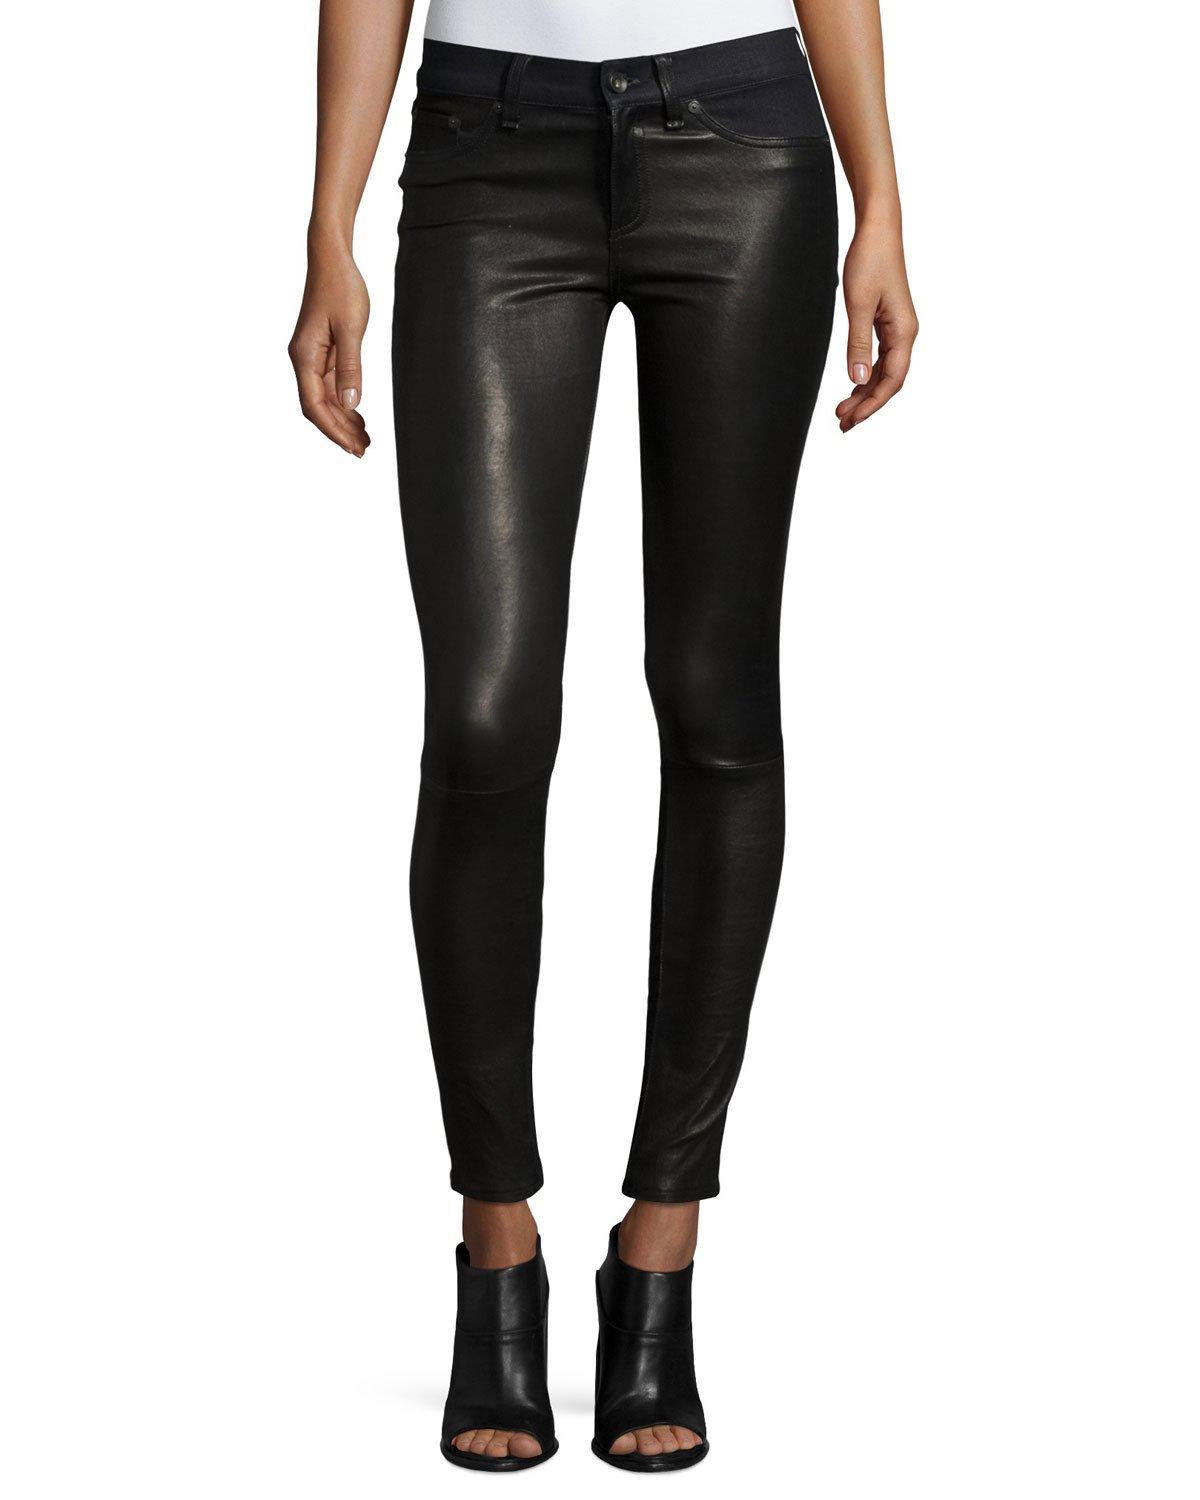 Lyst - Rag & bone Hyde Essex Leather & Denim Skinny Jeans in Black